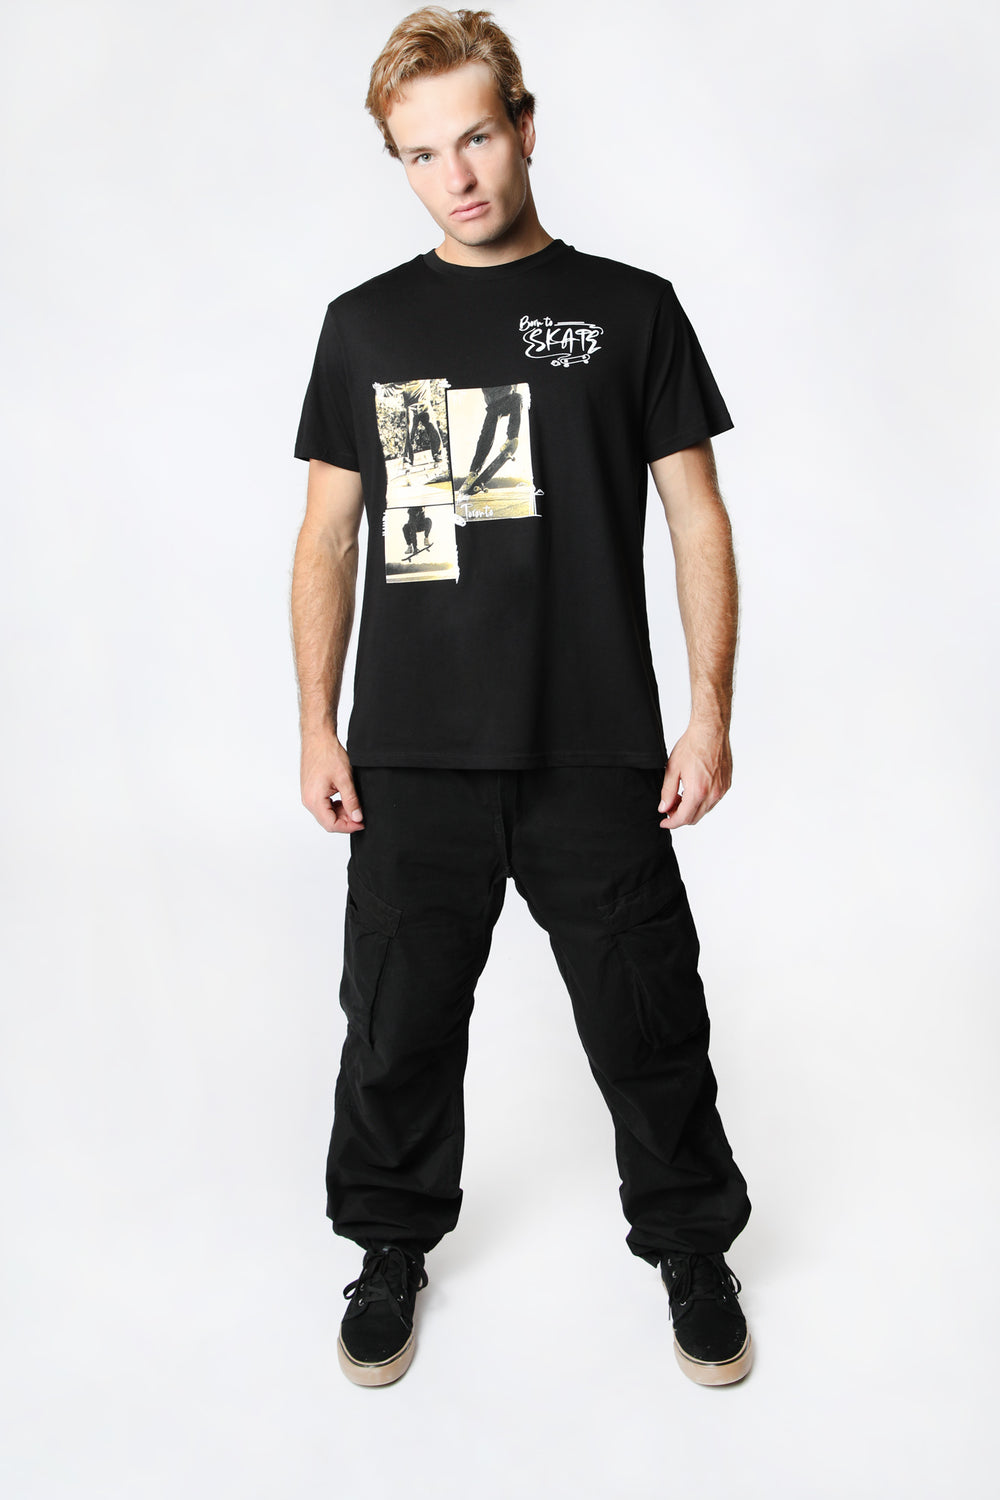 Zoo York Mens Born To Skate T-Shirt Black